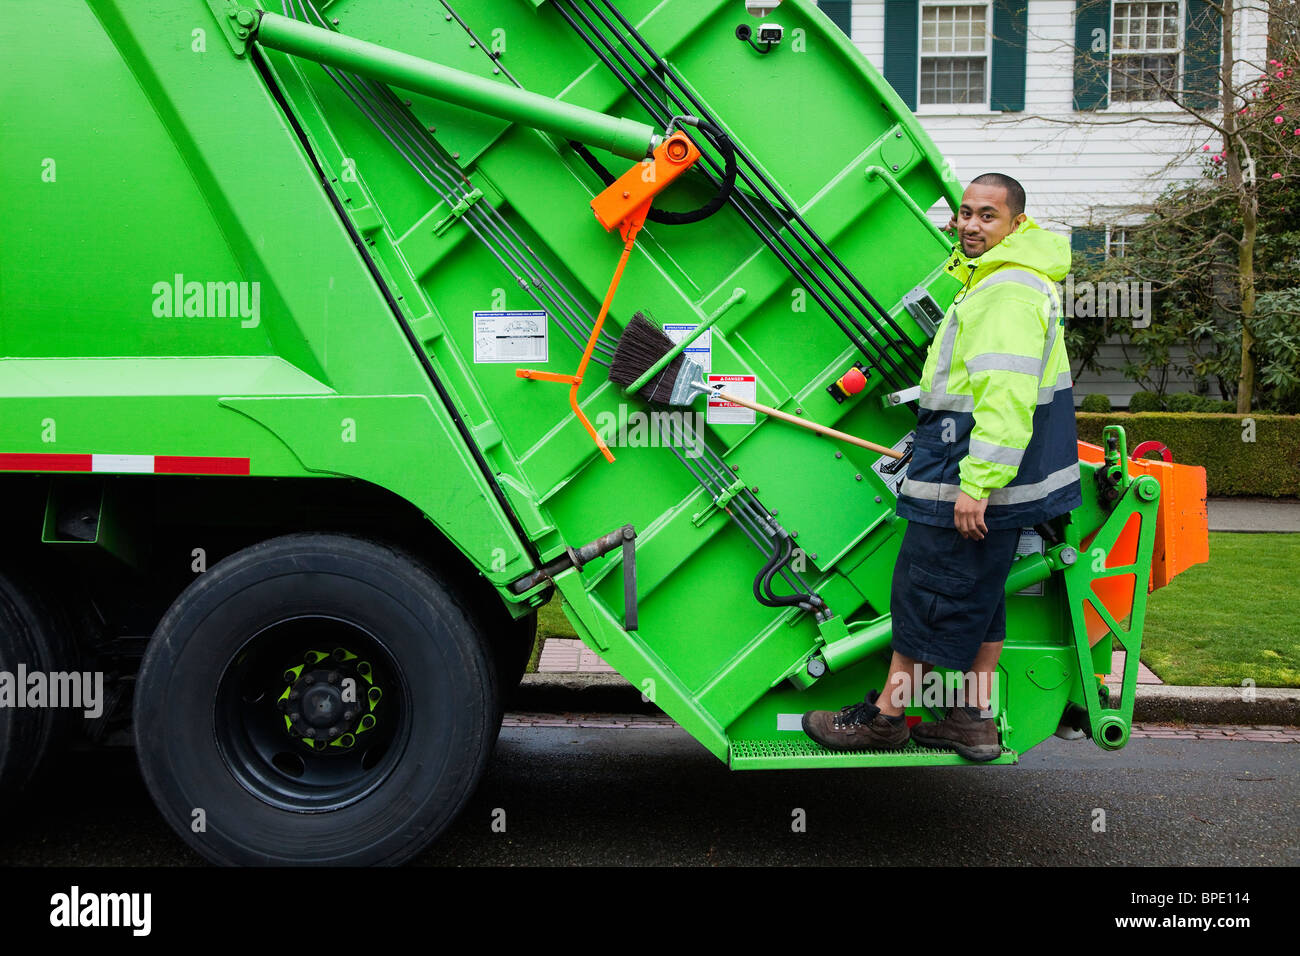 Pacific Islander man riding on garbage truck Stock Photo